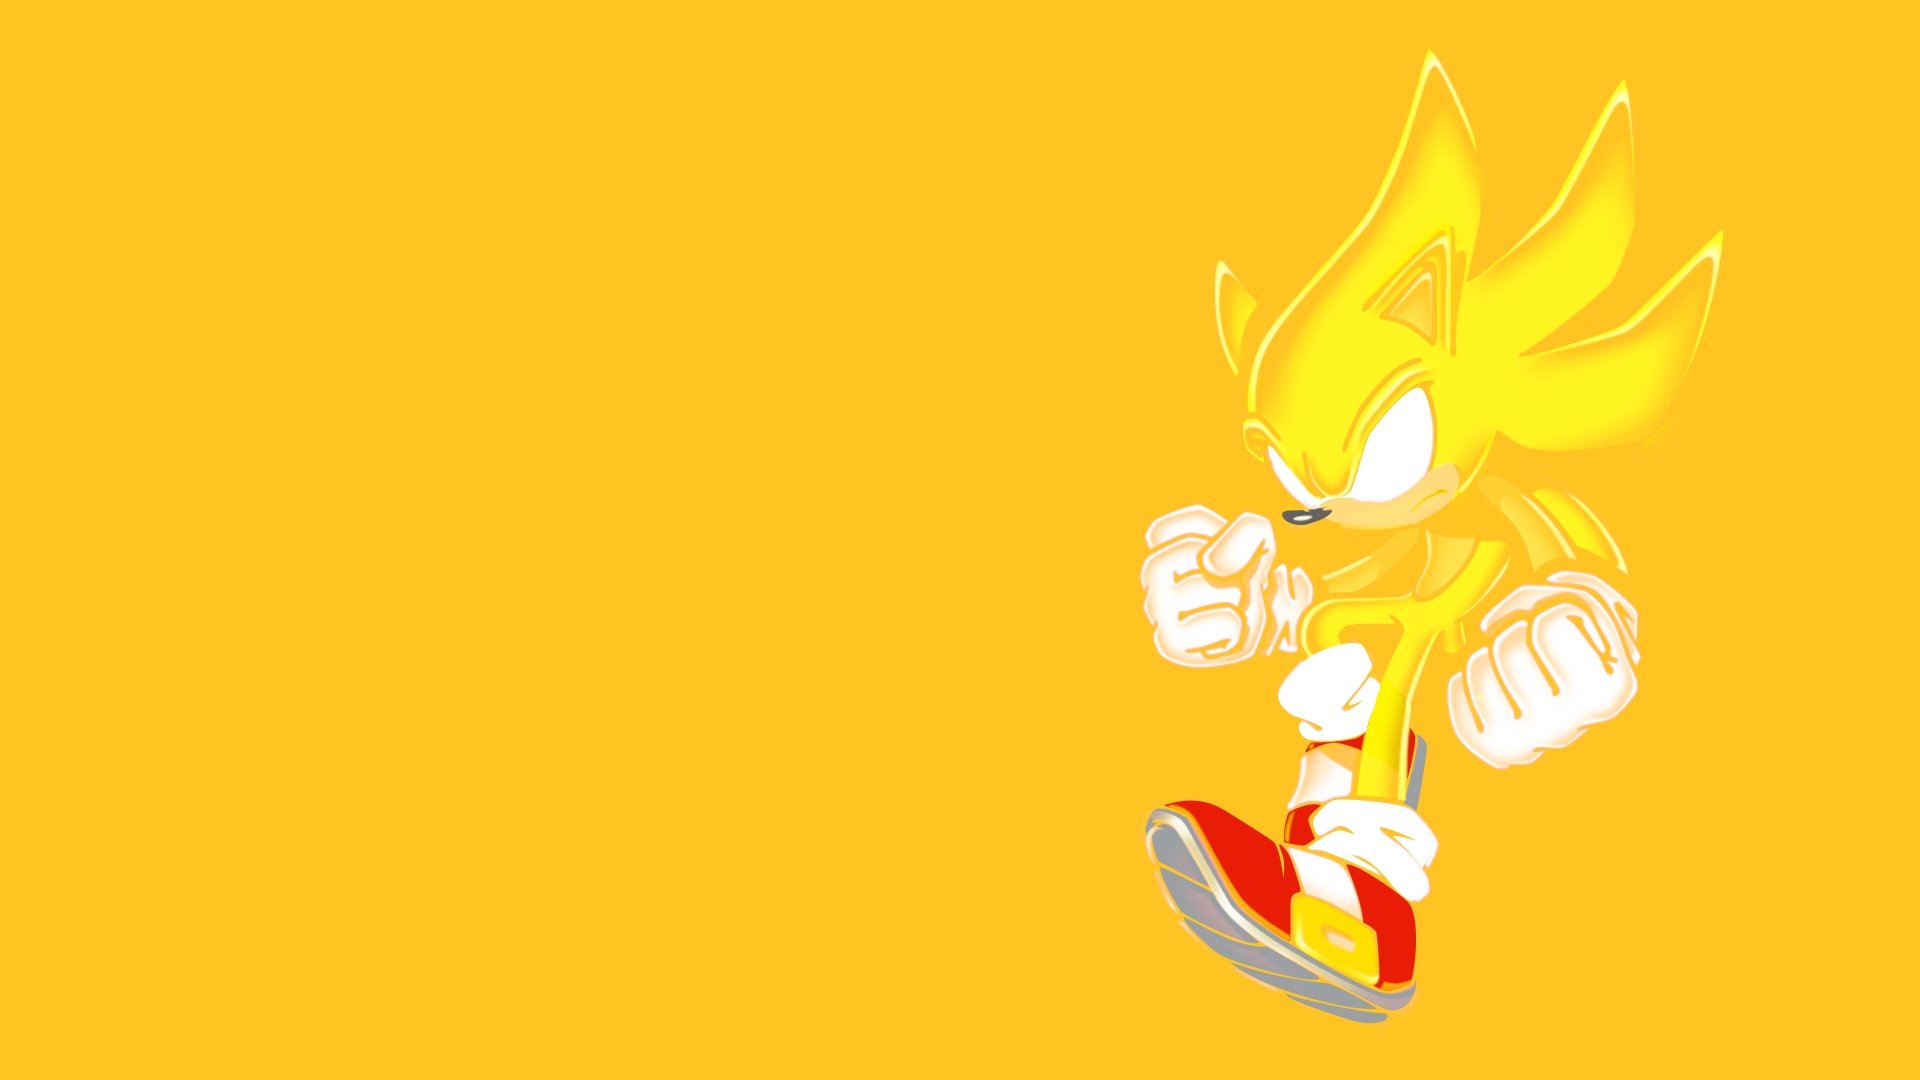 Sonic Sonic the Hedgehog Yellow wallpaper 1920x1080 58362